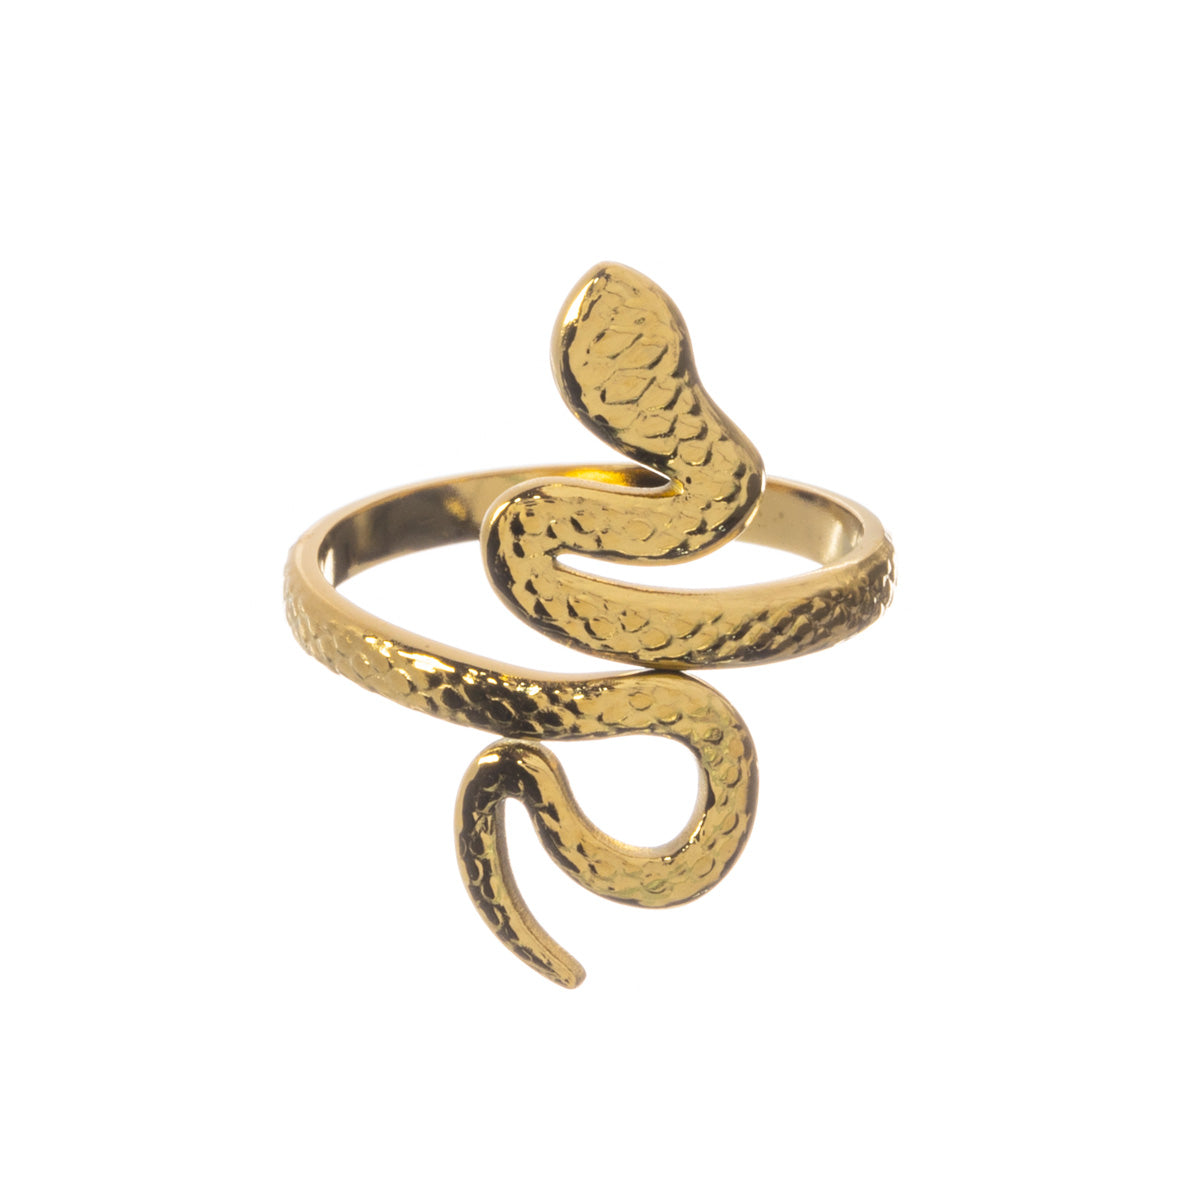 Snake ring single size steel ring (Steel 316L)